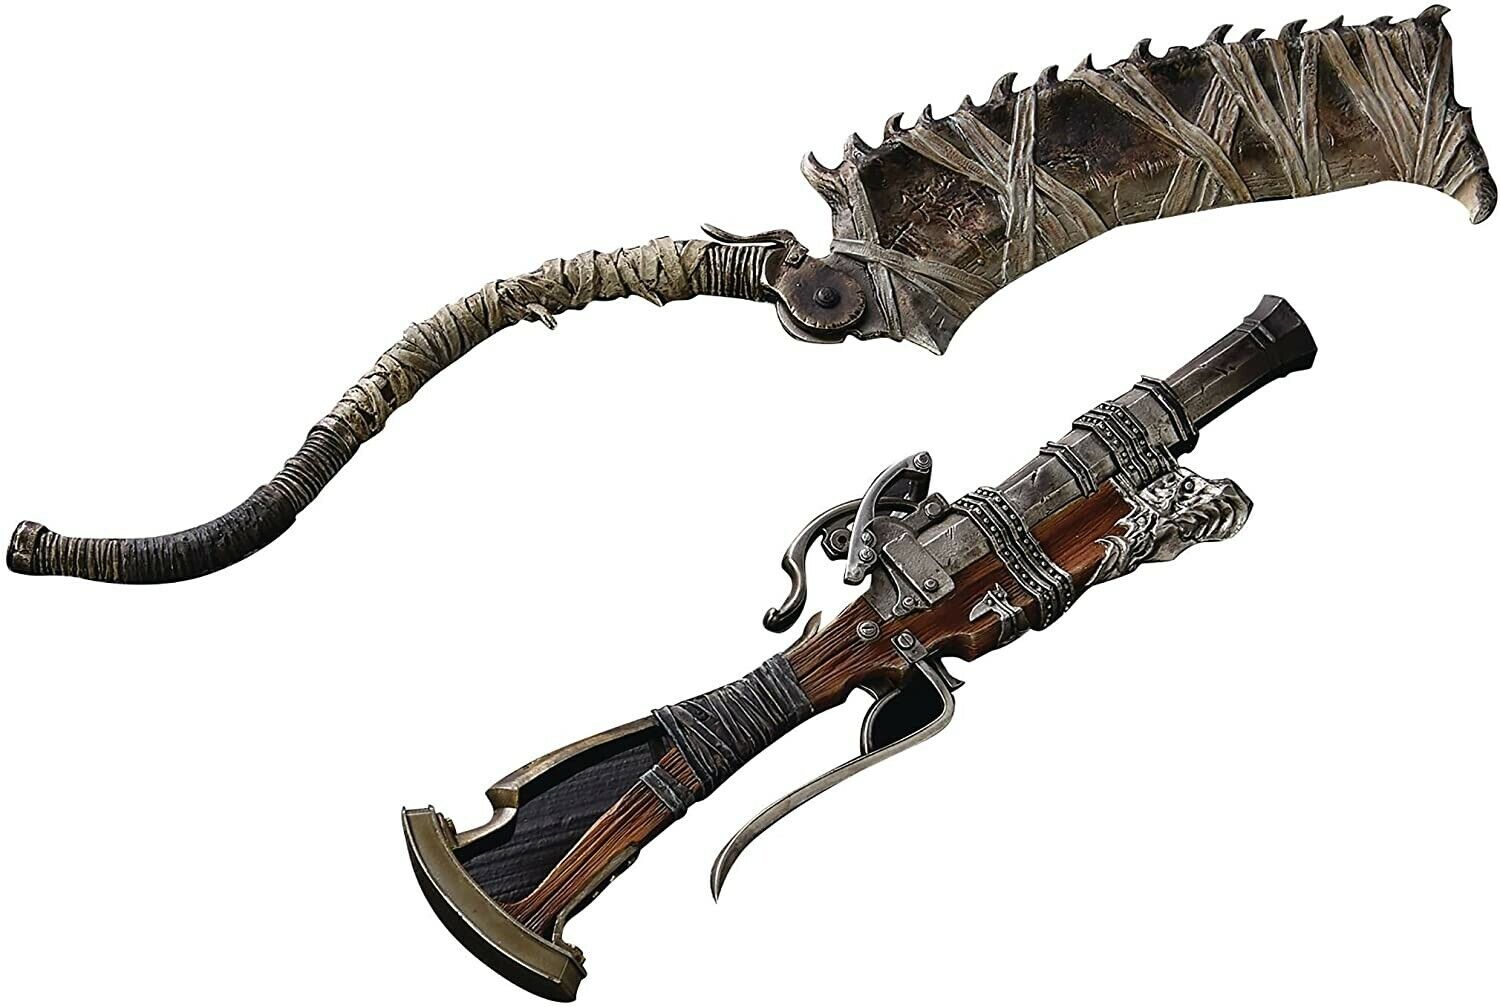 Bloodborne Hunter's Arsenal Saw toothpicks shotgun 1/6 Weapon figure GECCO W/T